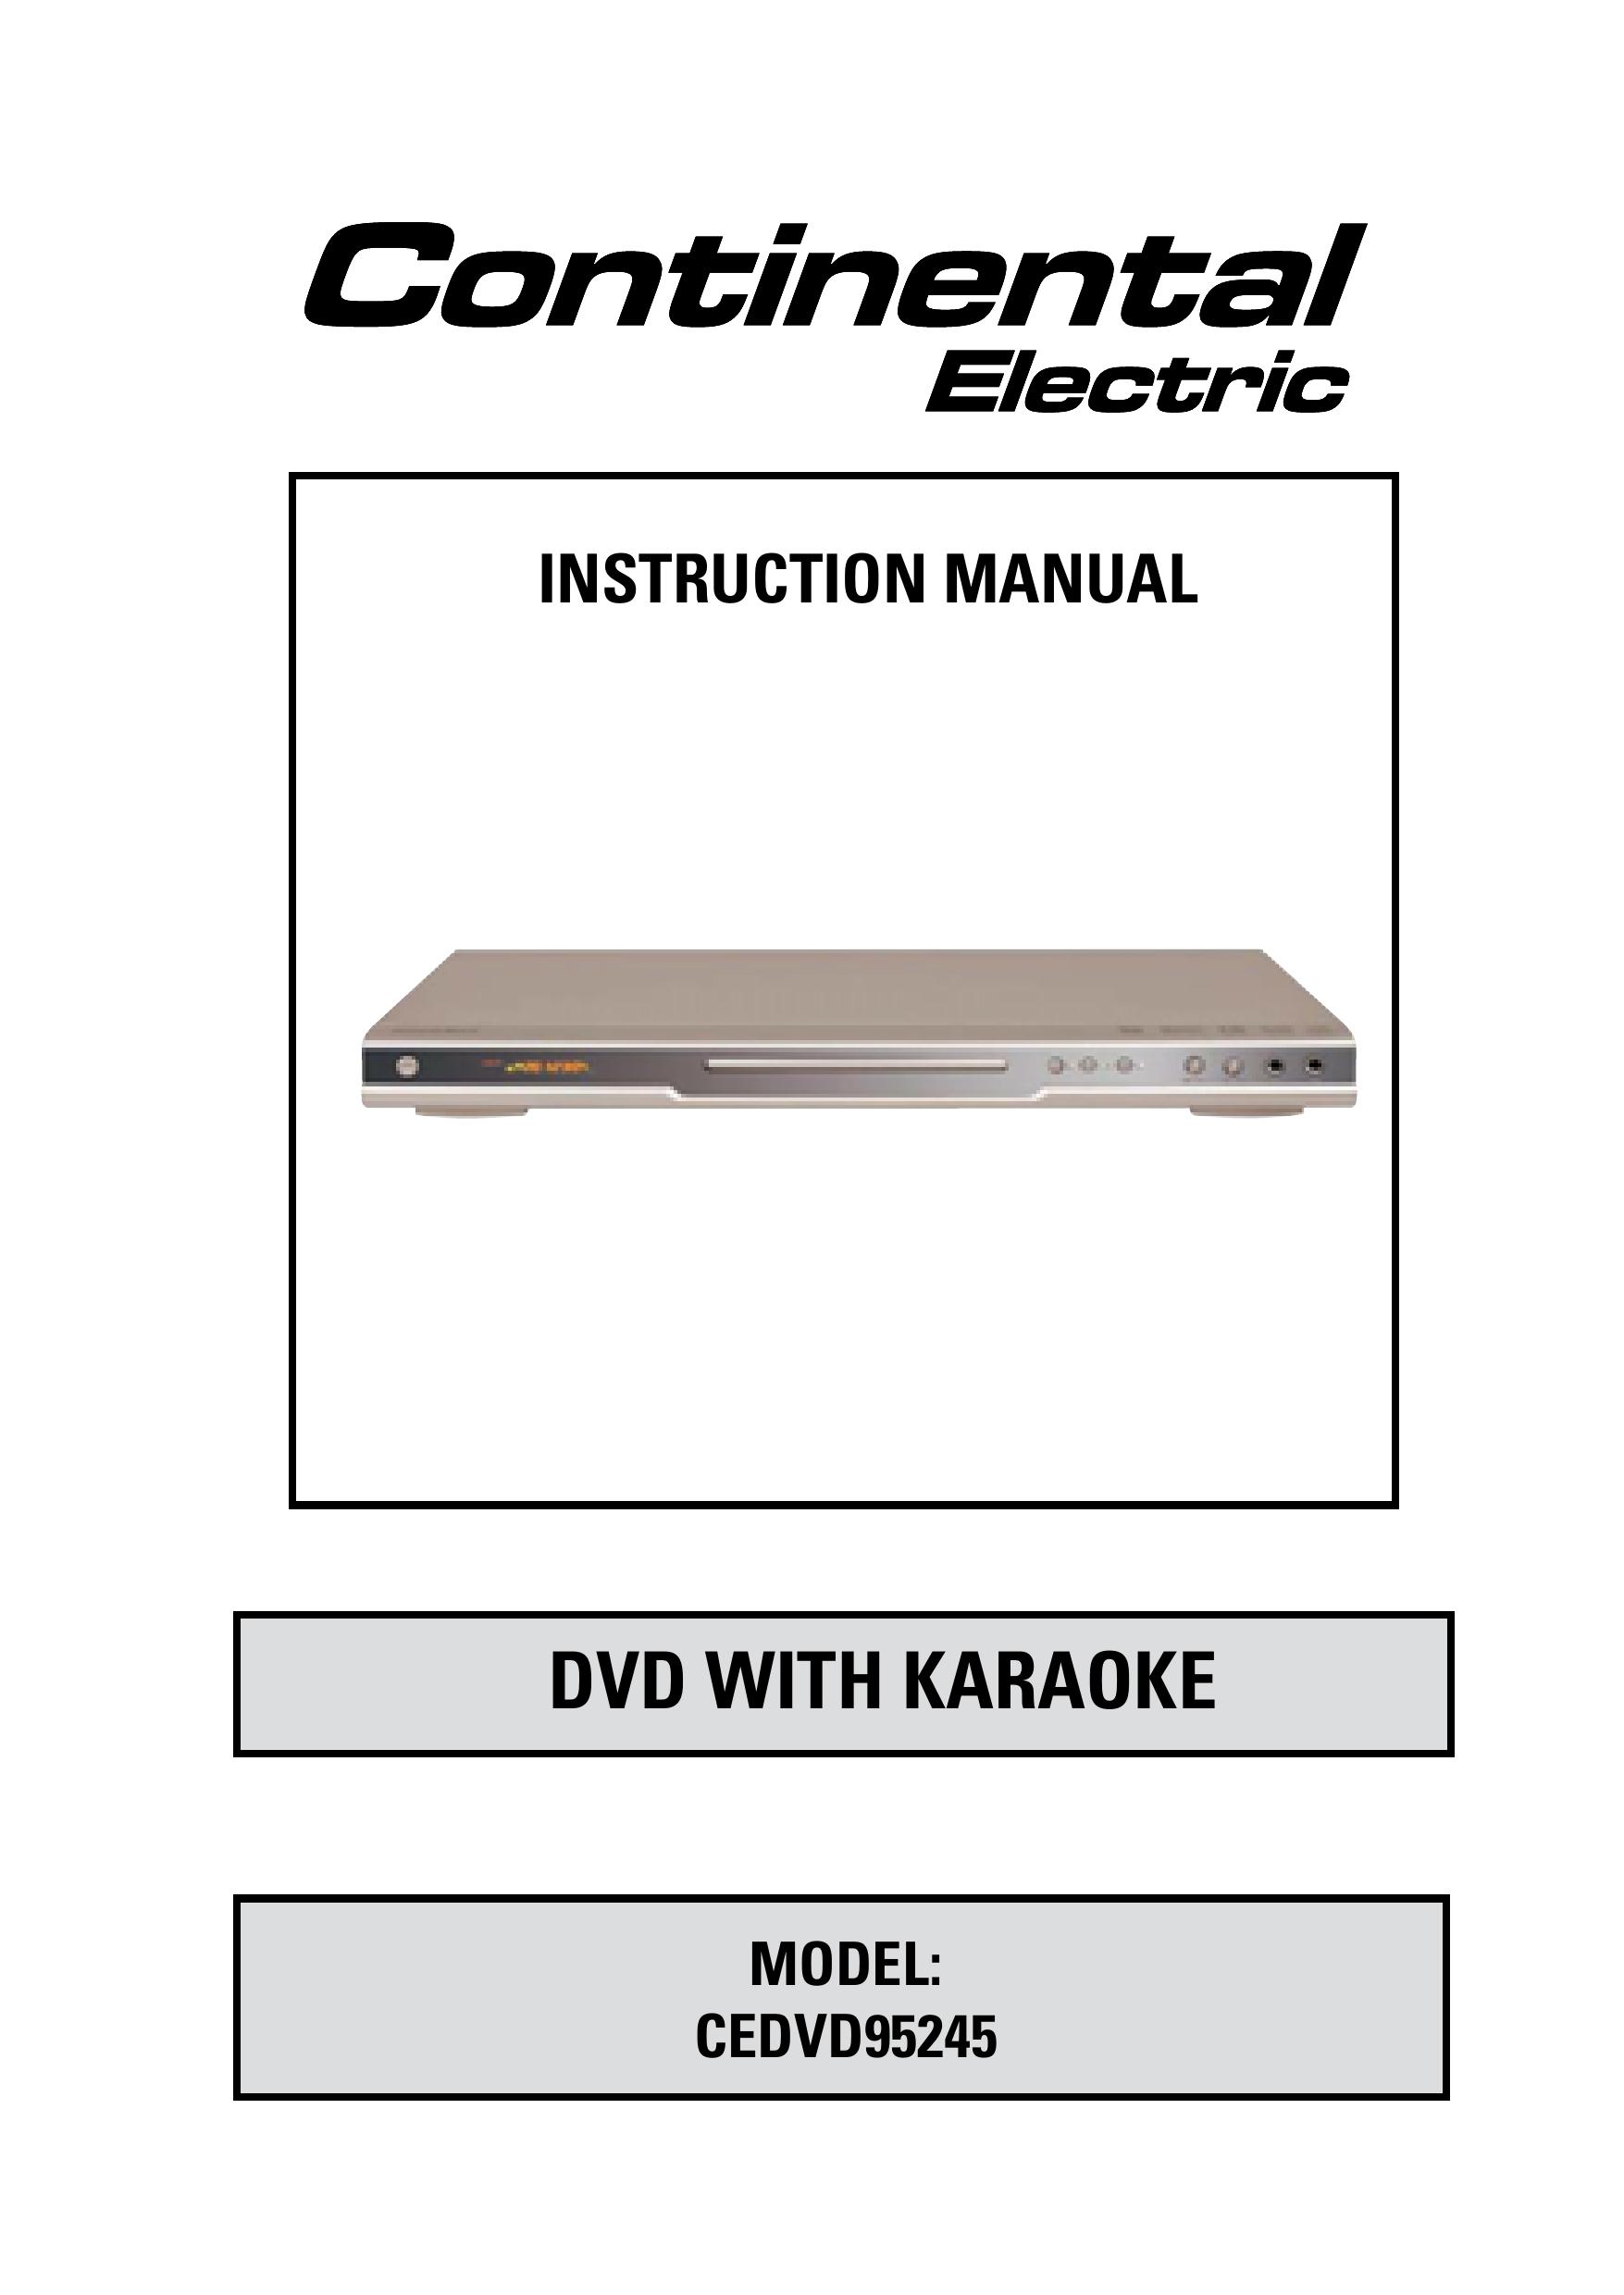 Continental Electric CEDVD95245 Karaoke Machine User Manual